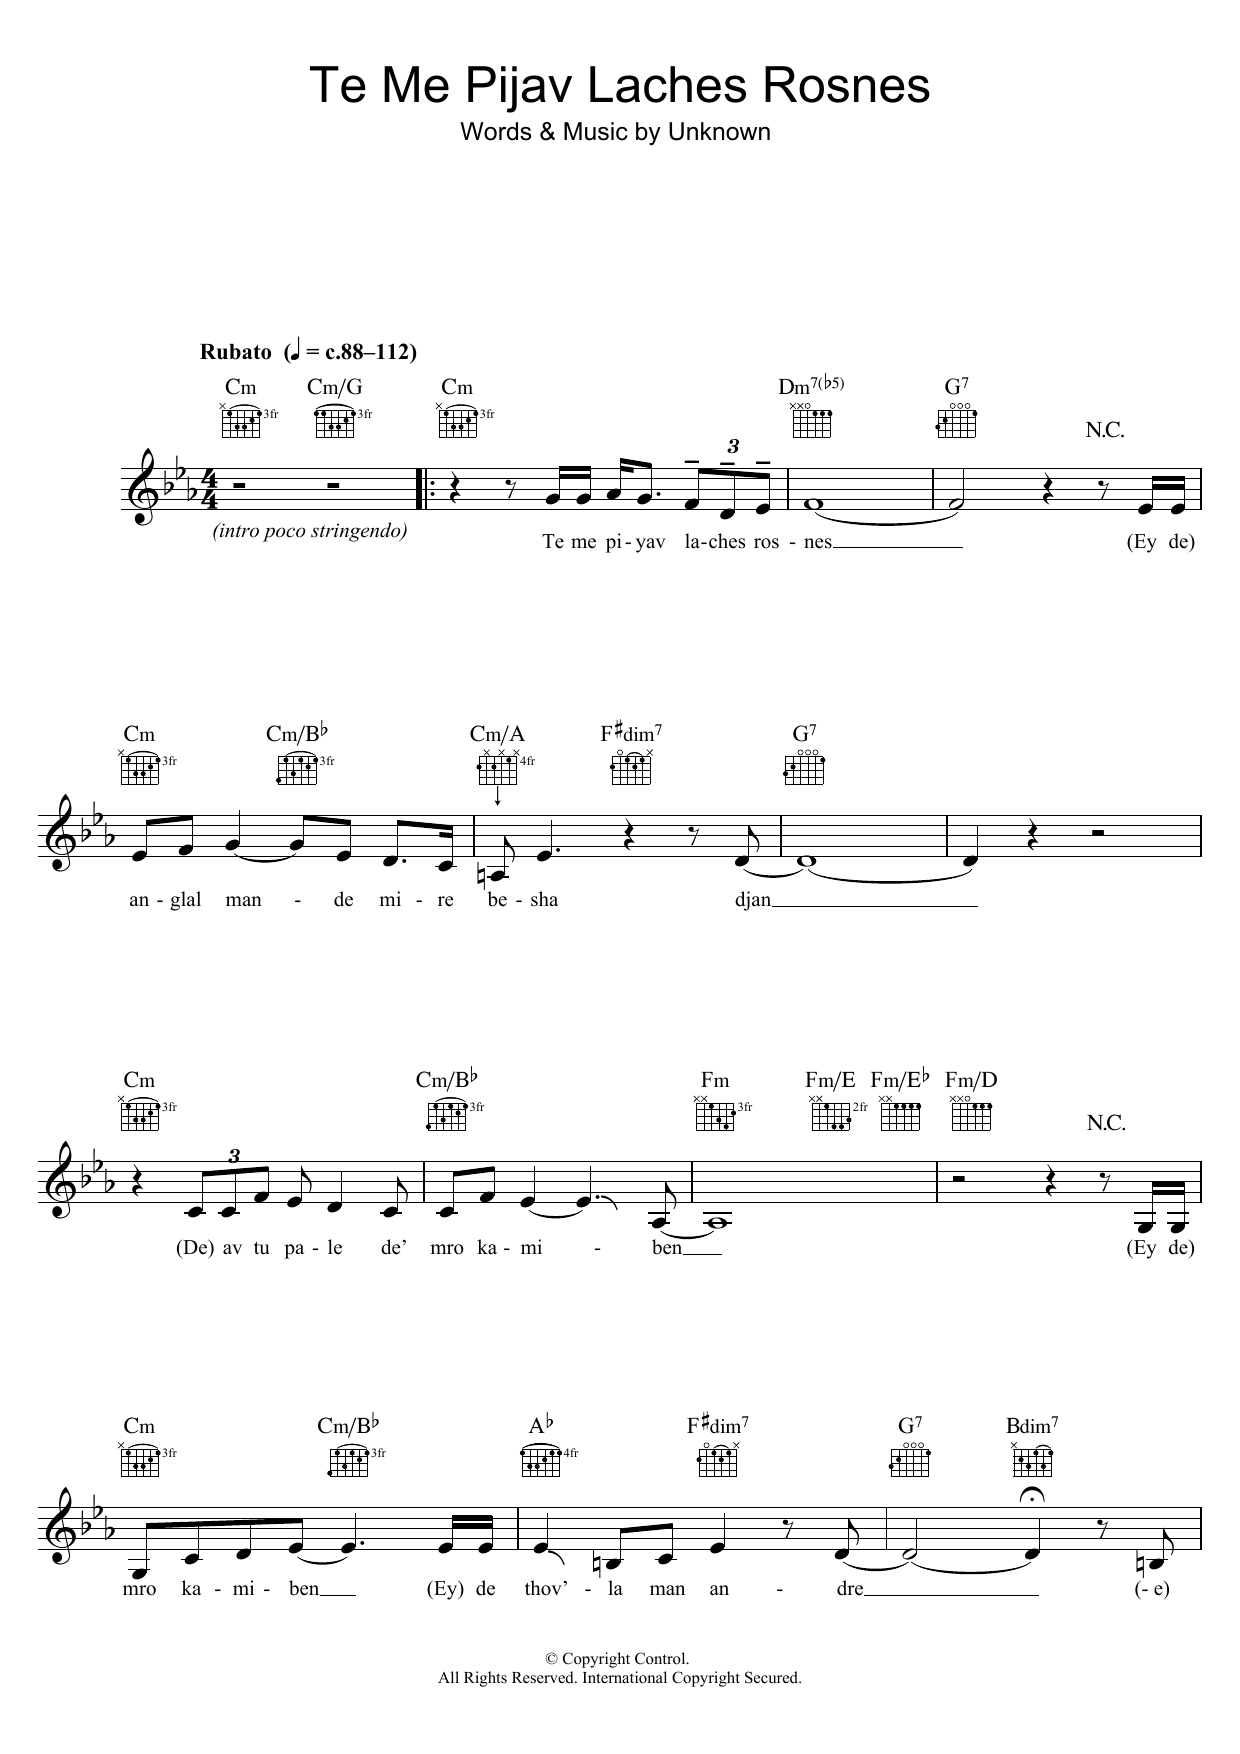 Vera Bila Te Me Pijav Lachness Rosnes Sheet Music Notes & Chords for Melody Line, Lyrics & Chords - Download or Print PDF